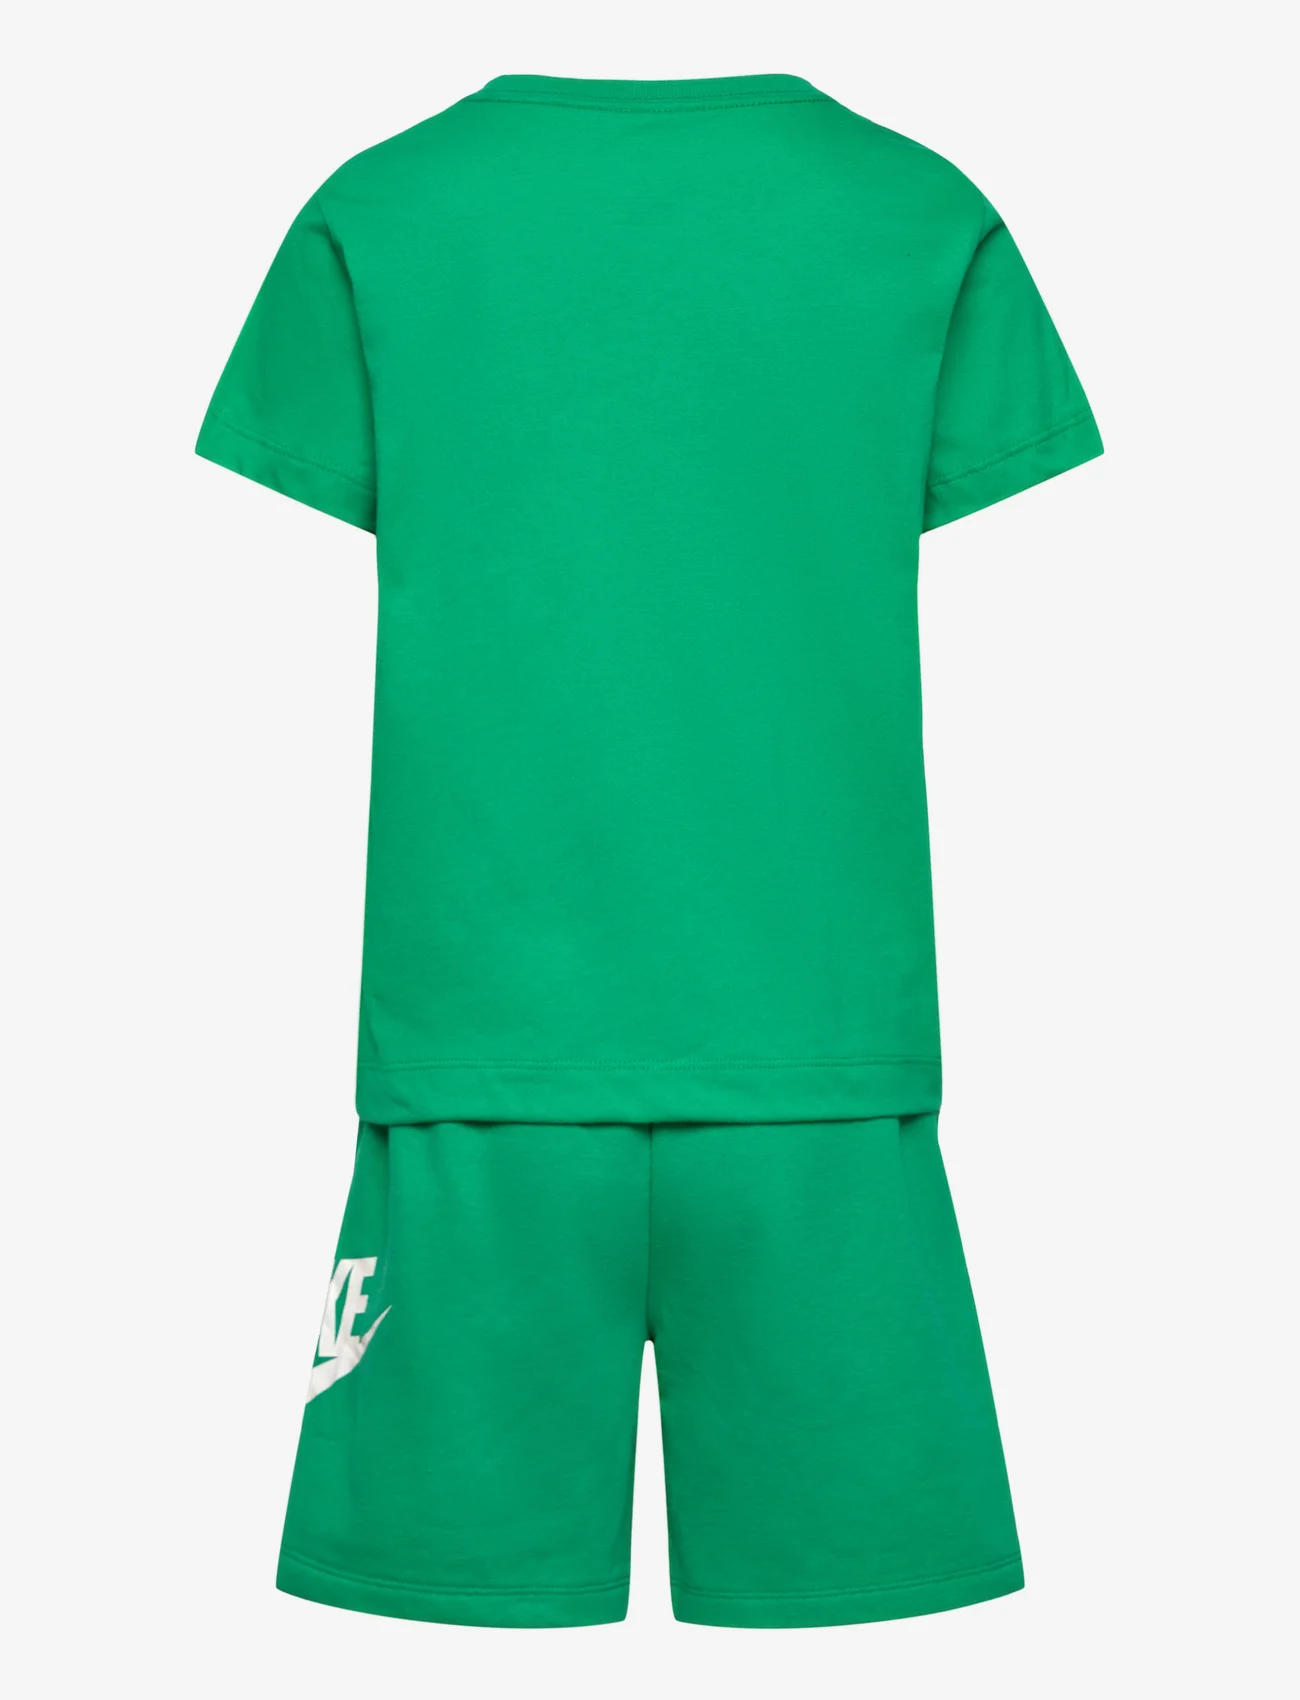 Nike - NKN CLUB TEE & SHORT SET - sets with short-sleeved t-shirt - stadium green - 1